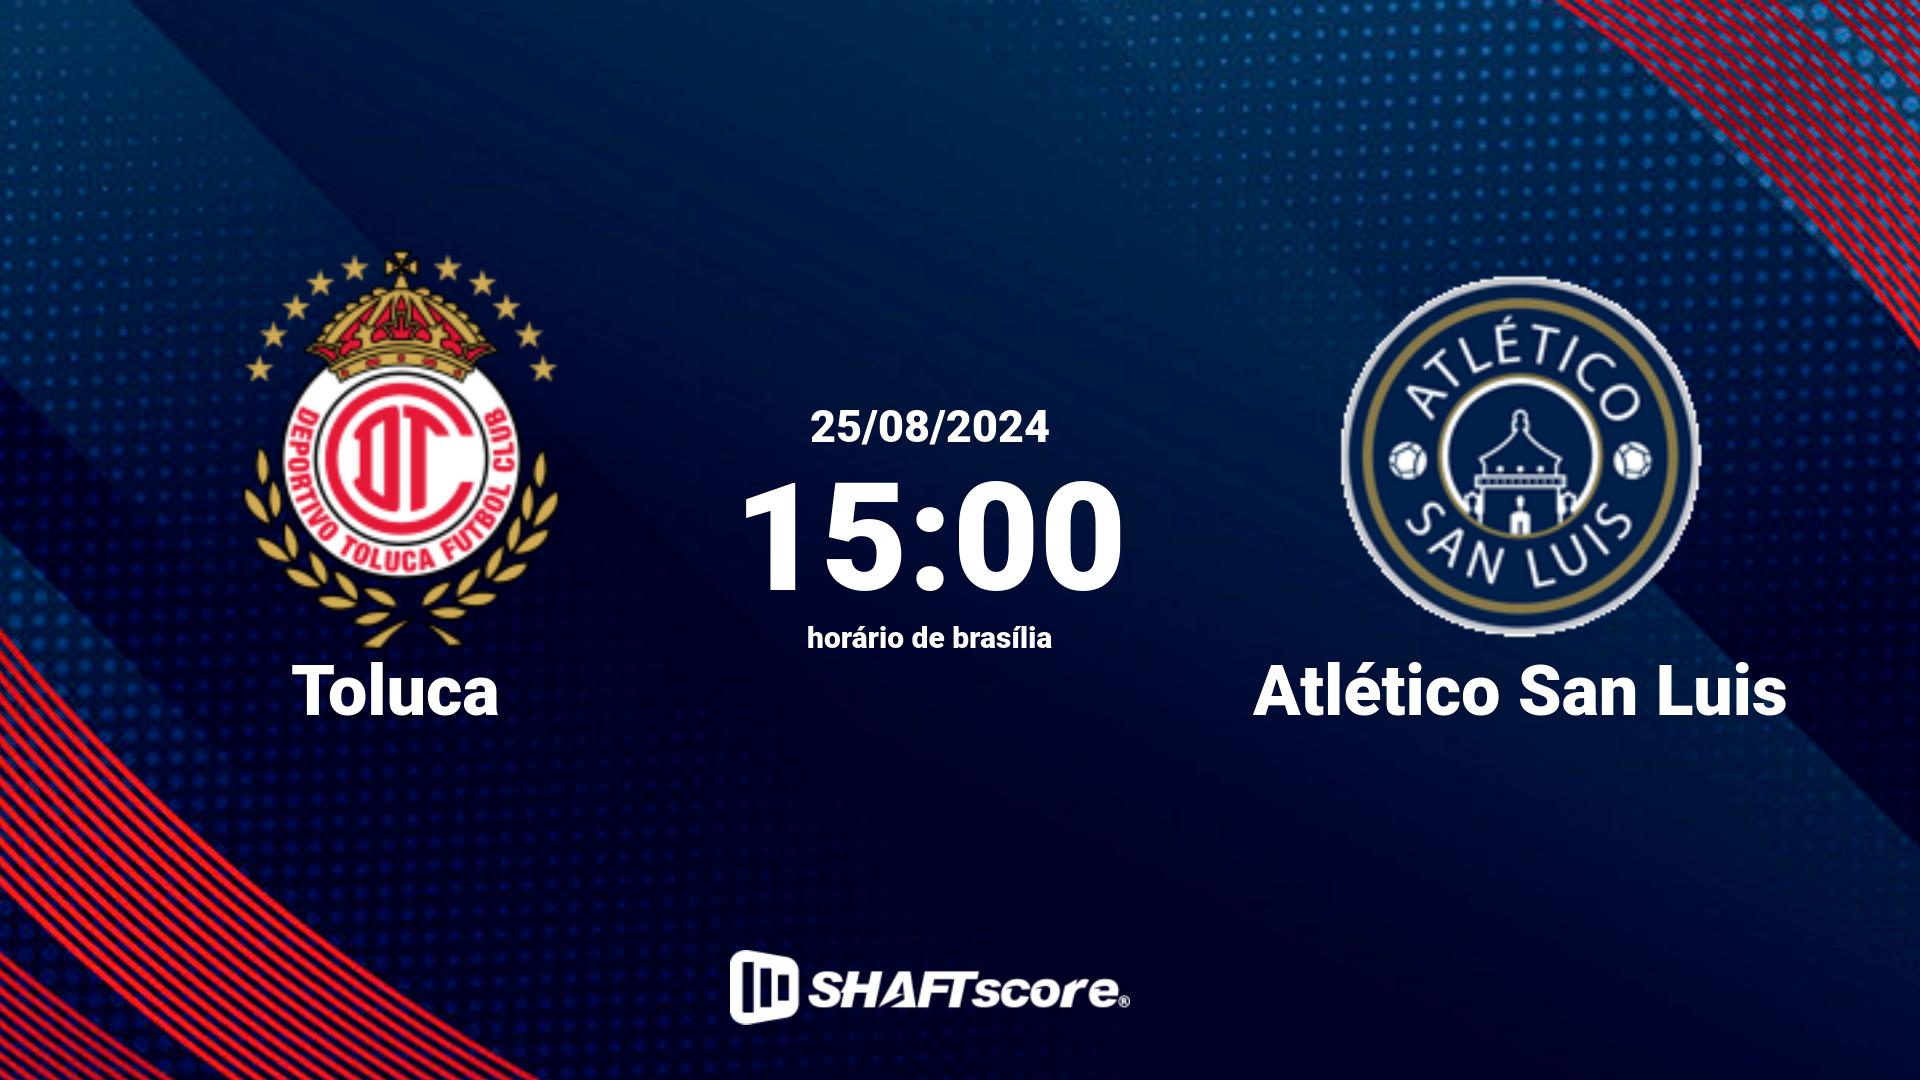 Estatísticas do jogo Toluca vs Atlético San Luis 25.08 15:00